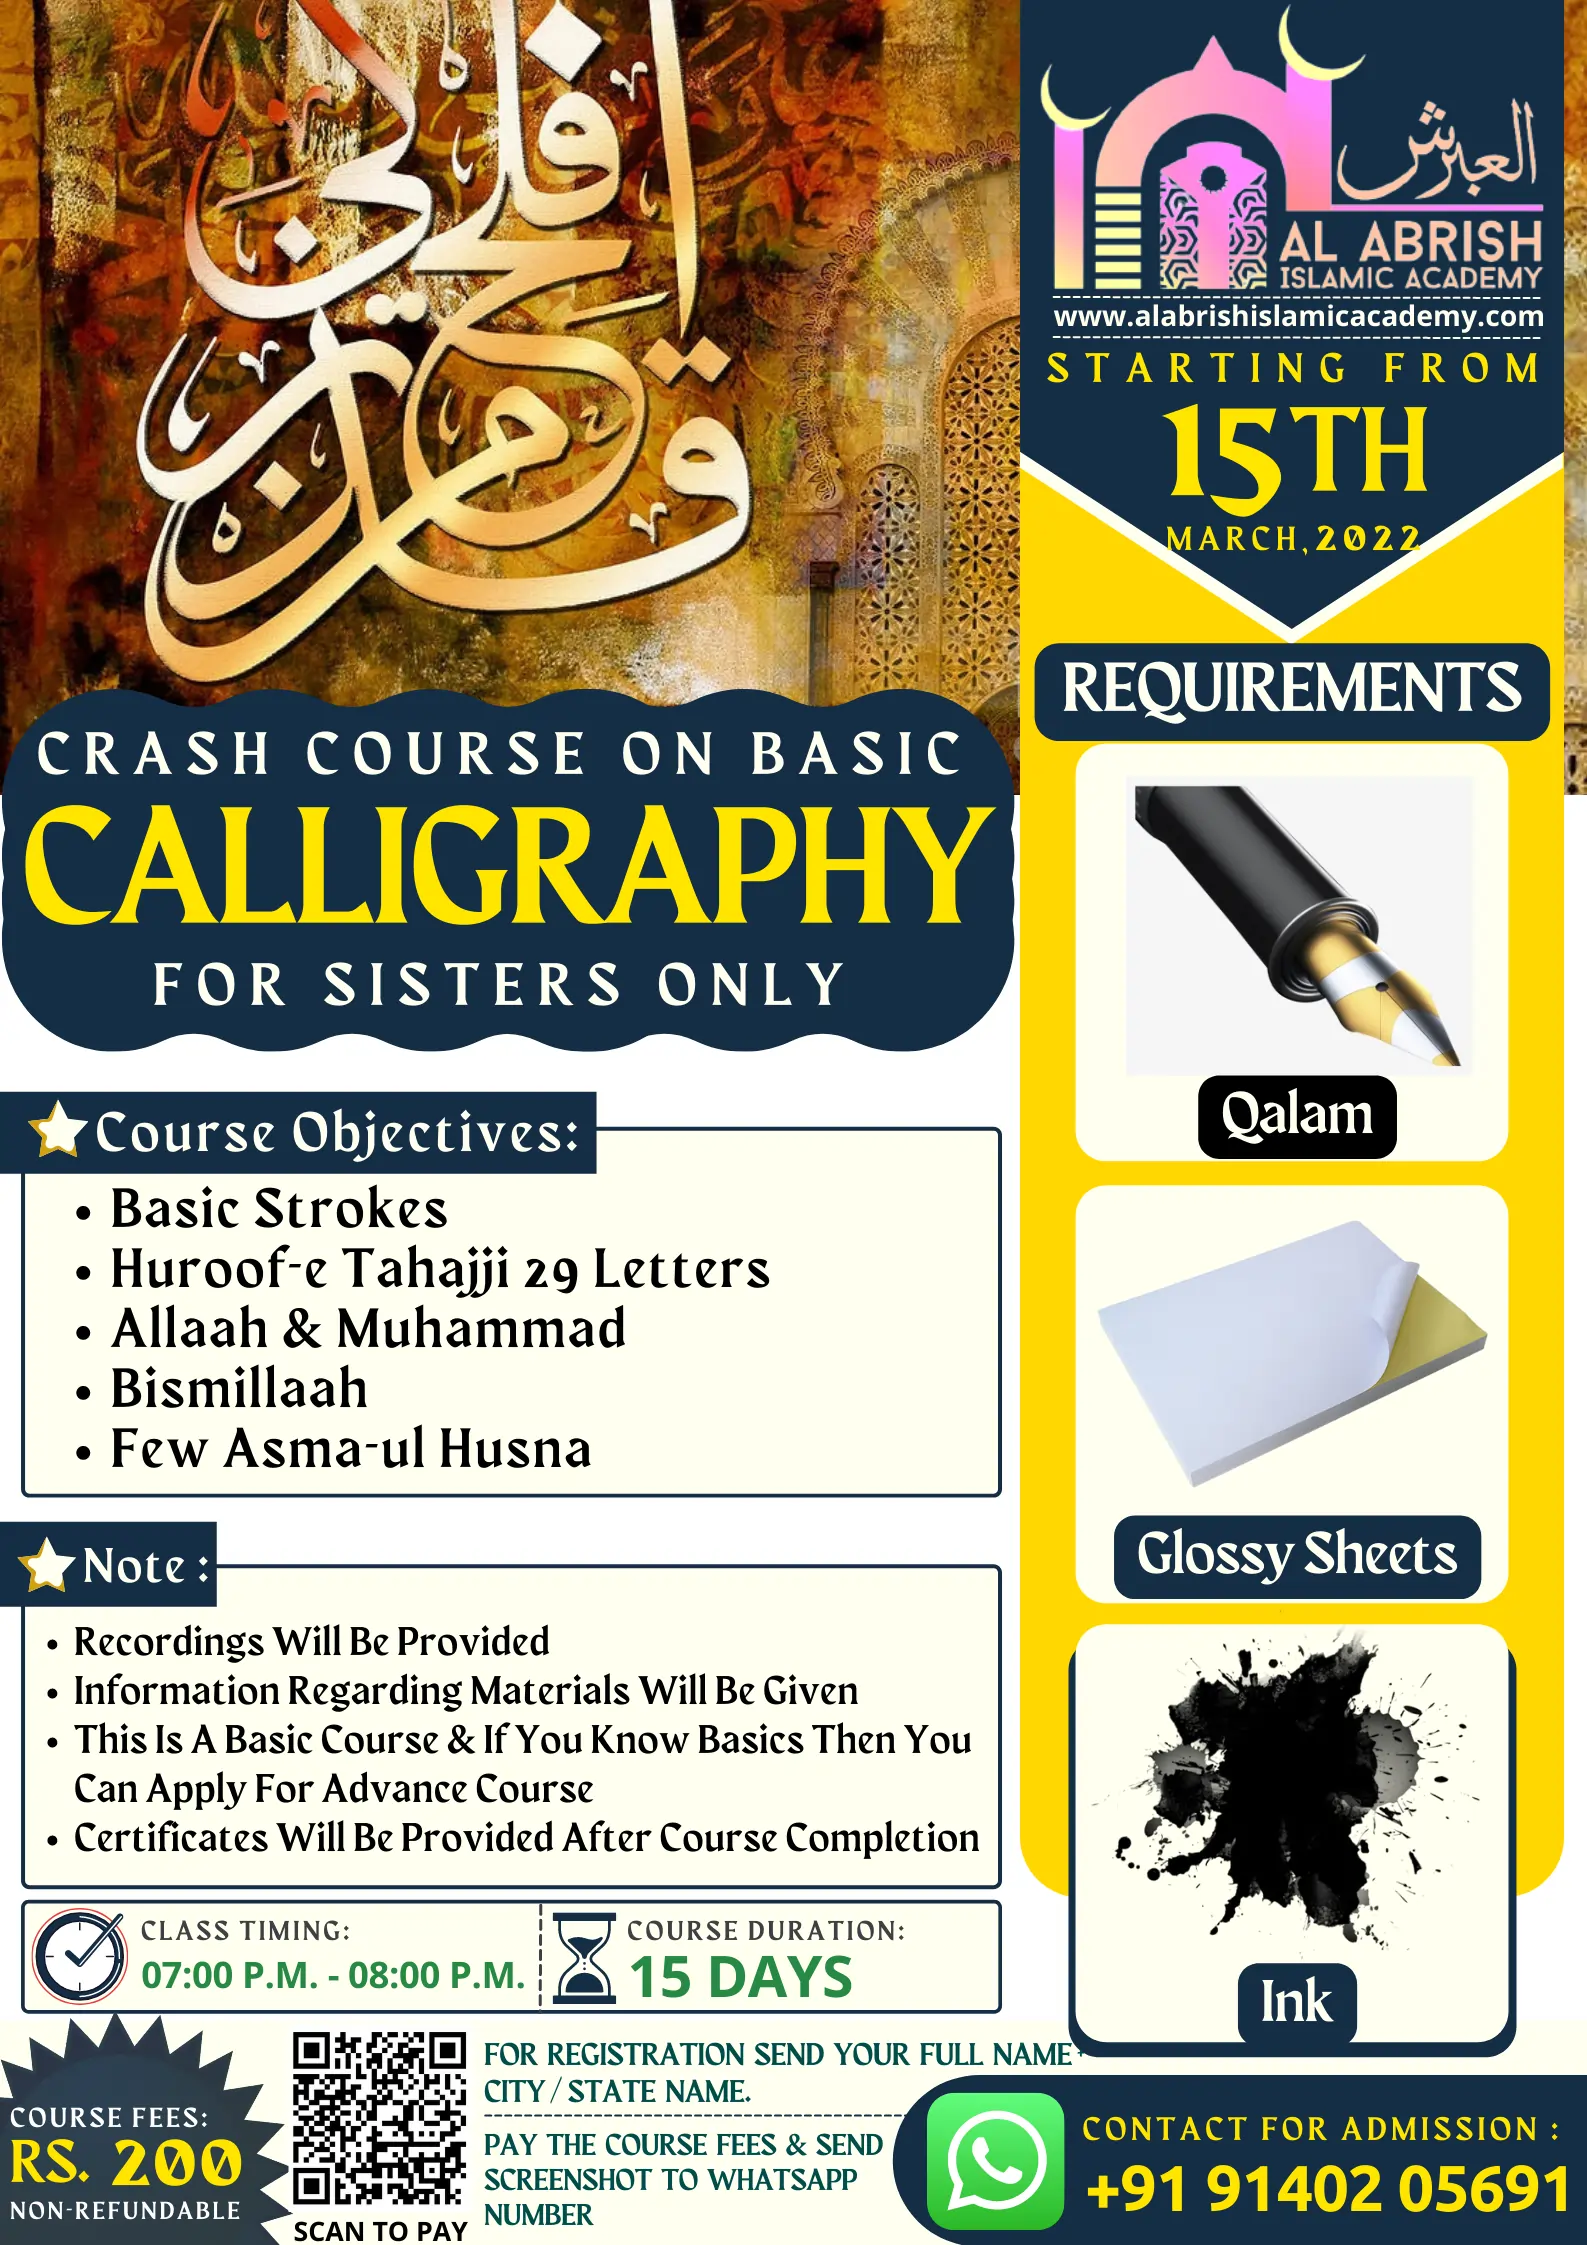 Crash Course on Basic Calligraphy